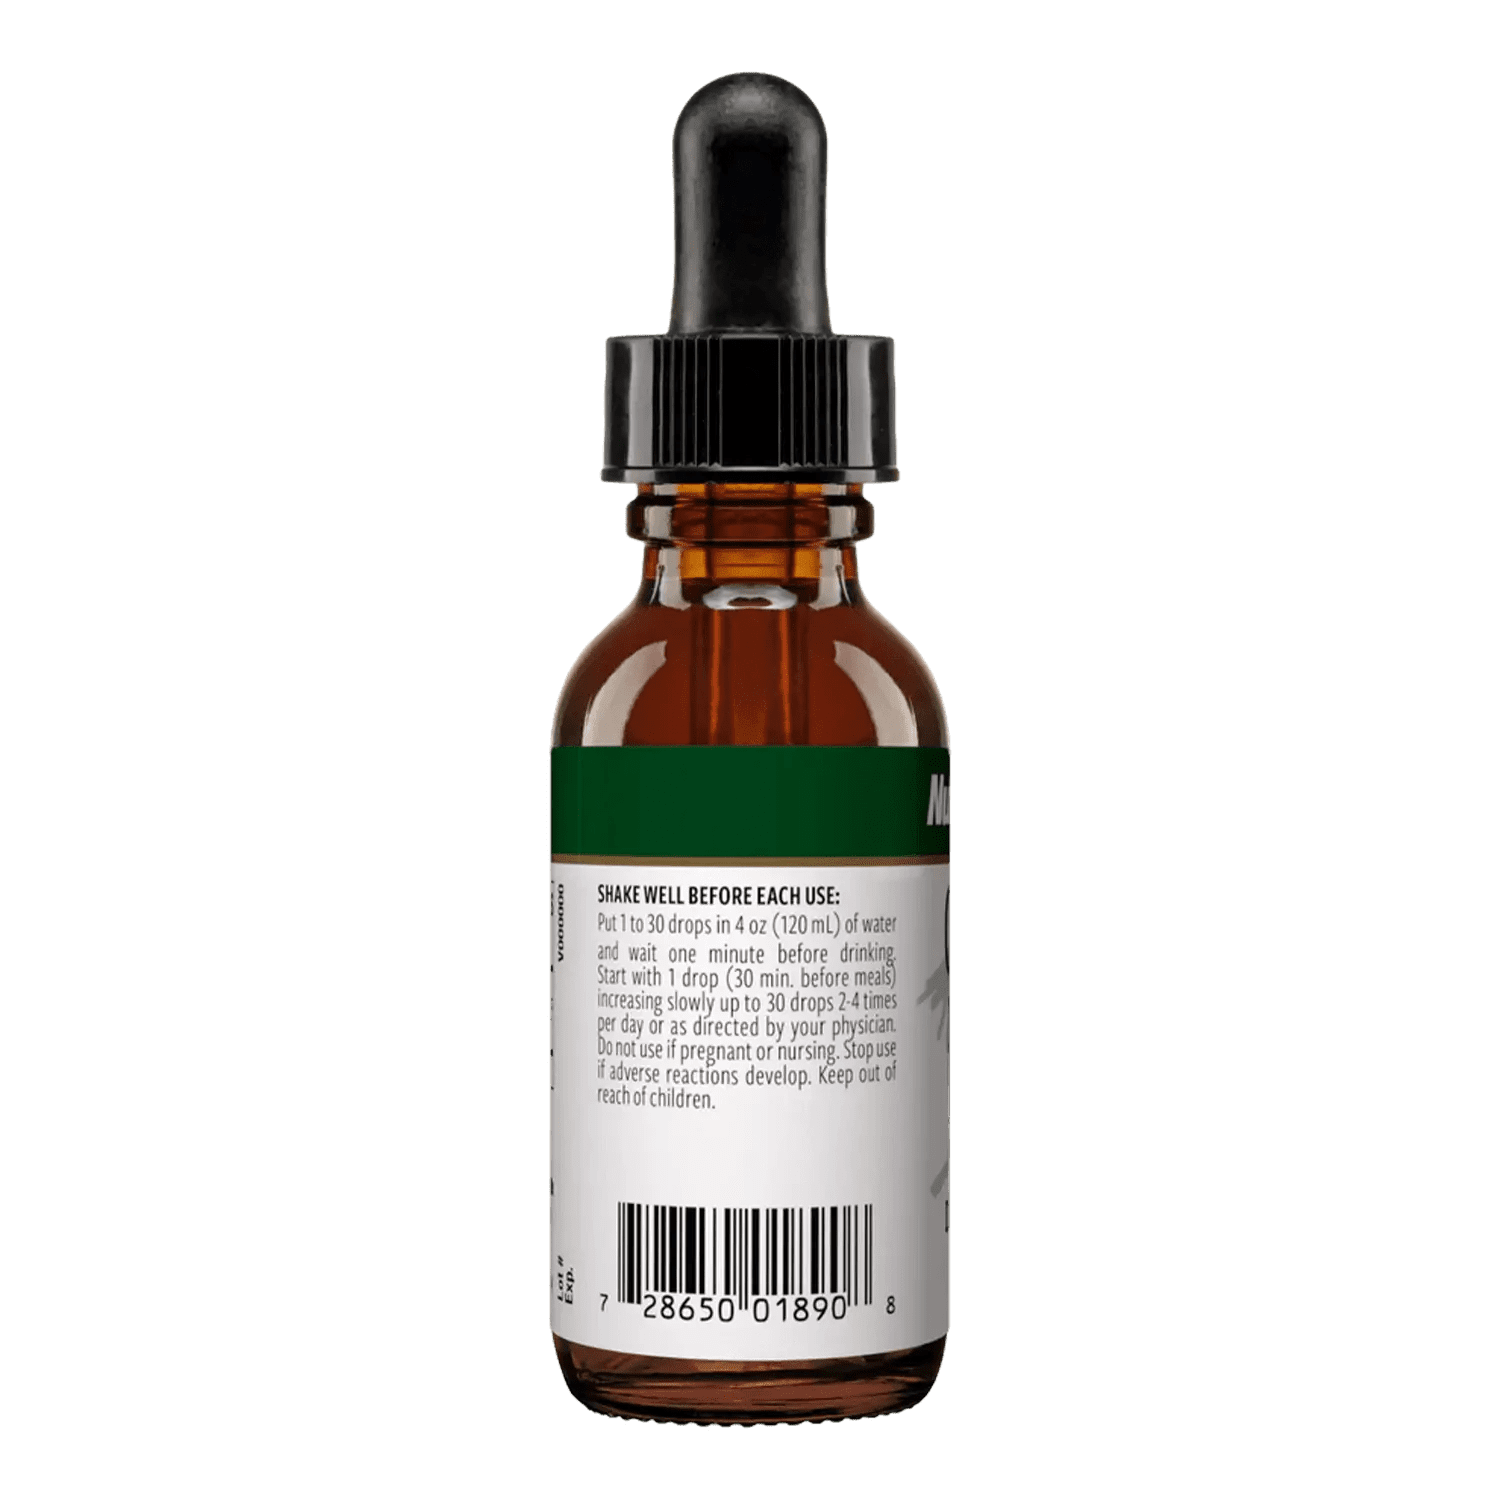 Chanca Piedra - 1oz liquid supplement